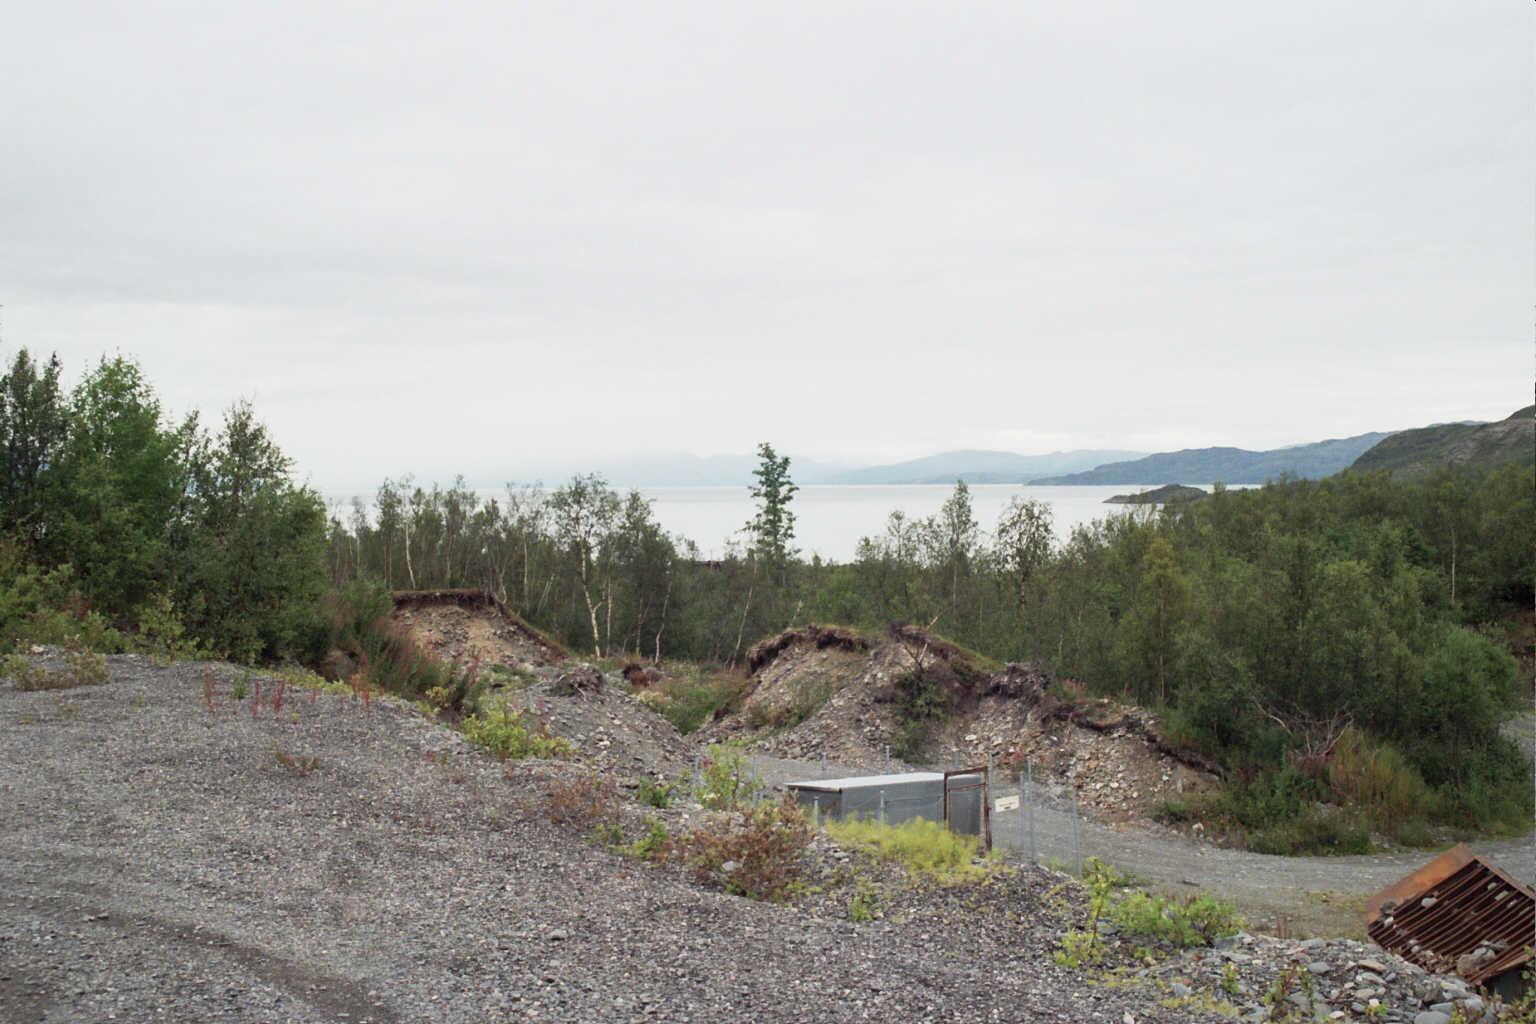 Looking north, towards Altafjord